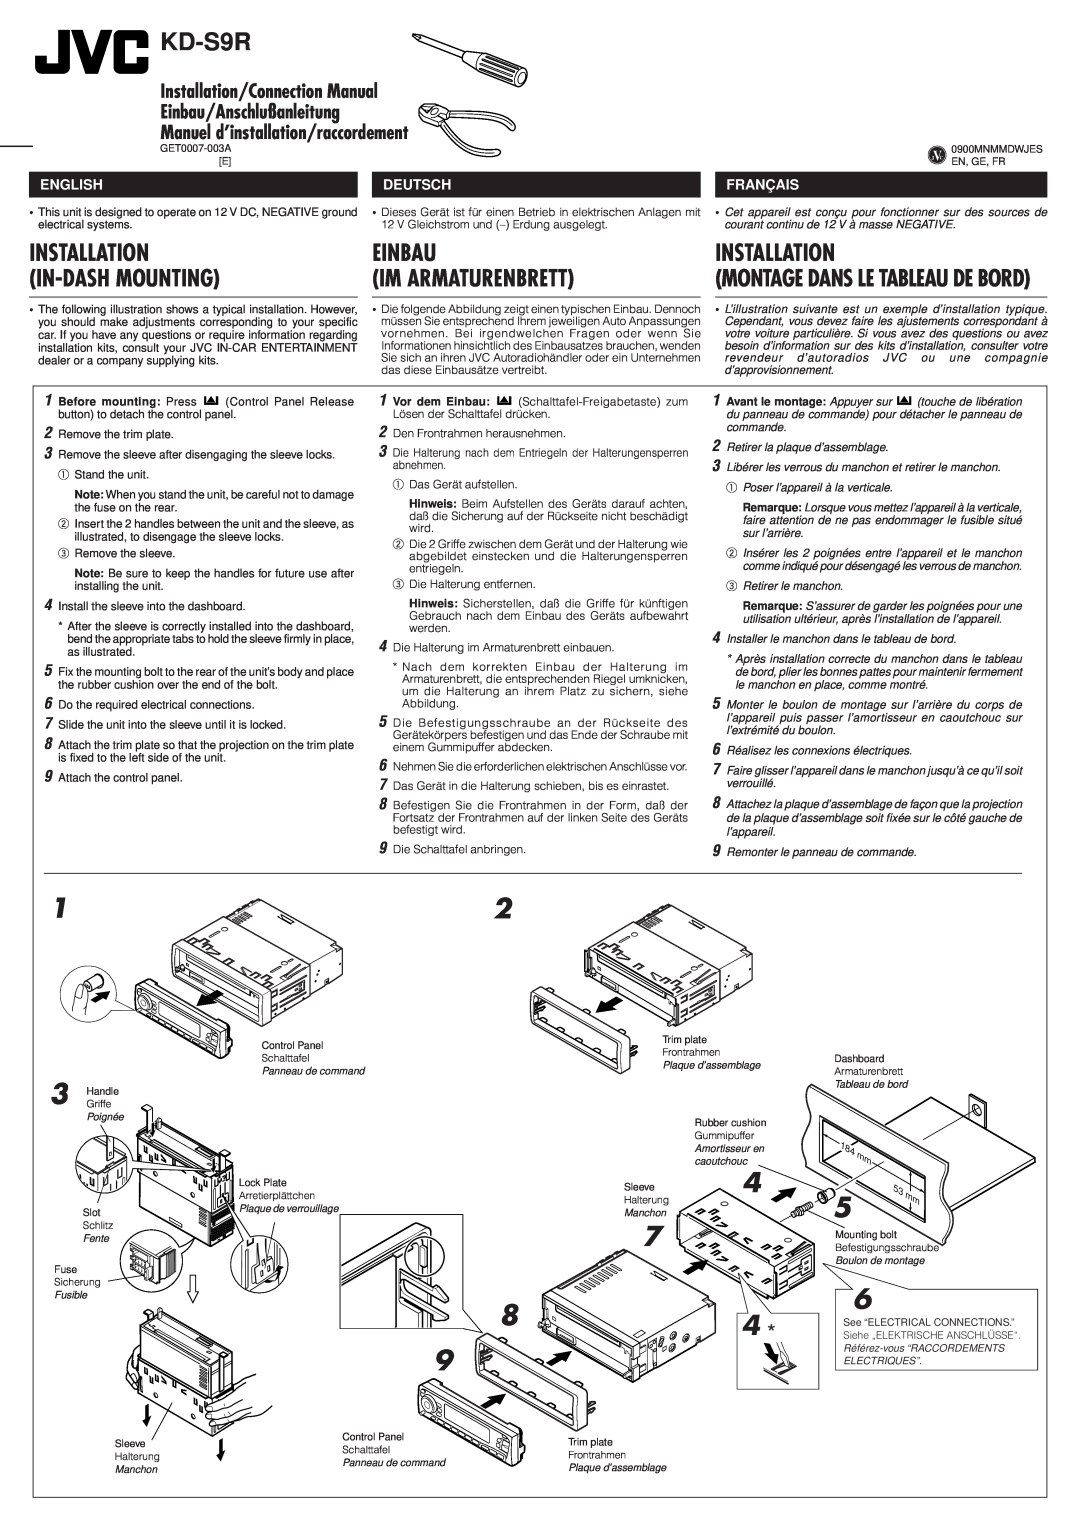 JVC KD-S9R manual Einbau Im Armaturenbrett, English, Deutsch, Français, Installation/Connection Manual 